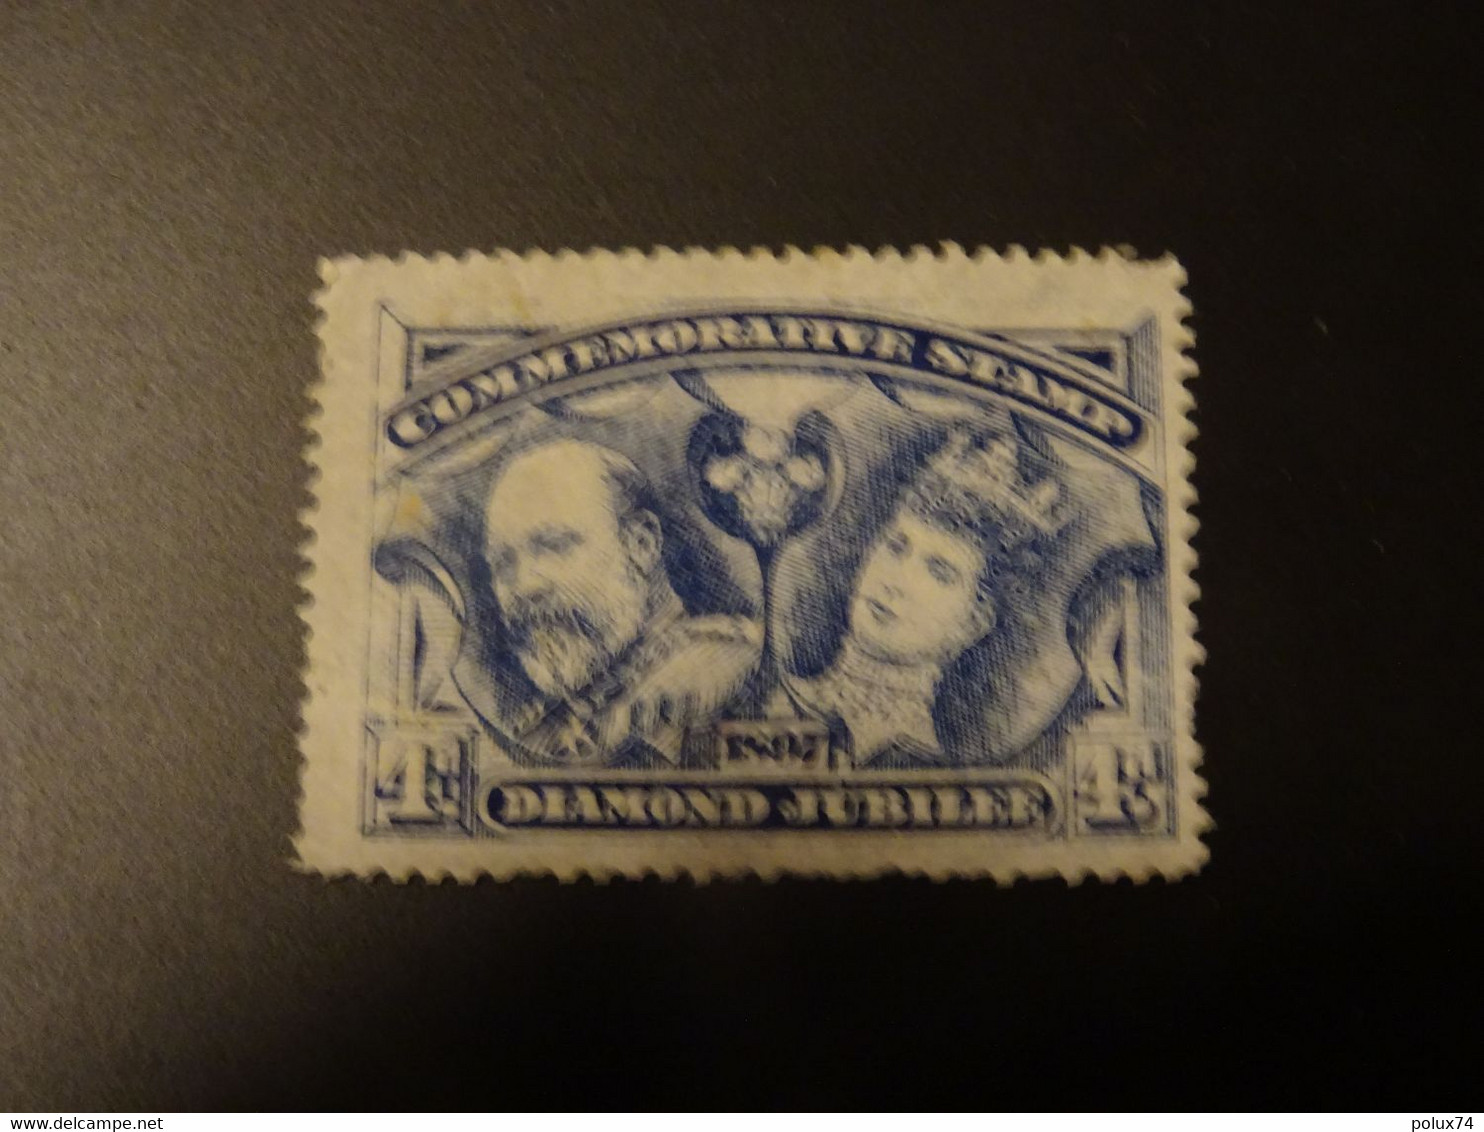 Vignette  1897 Commemorative Stamp - Ohne Zuordnung